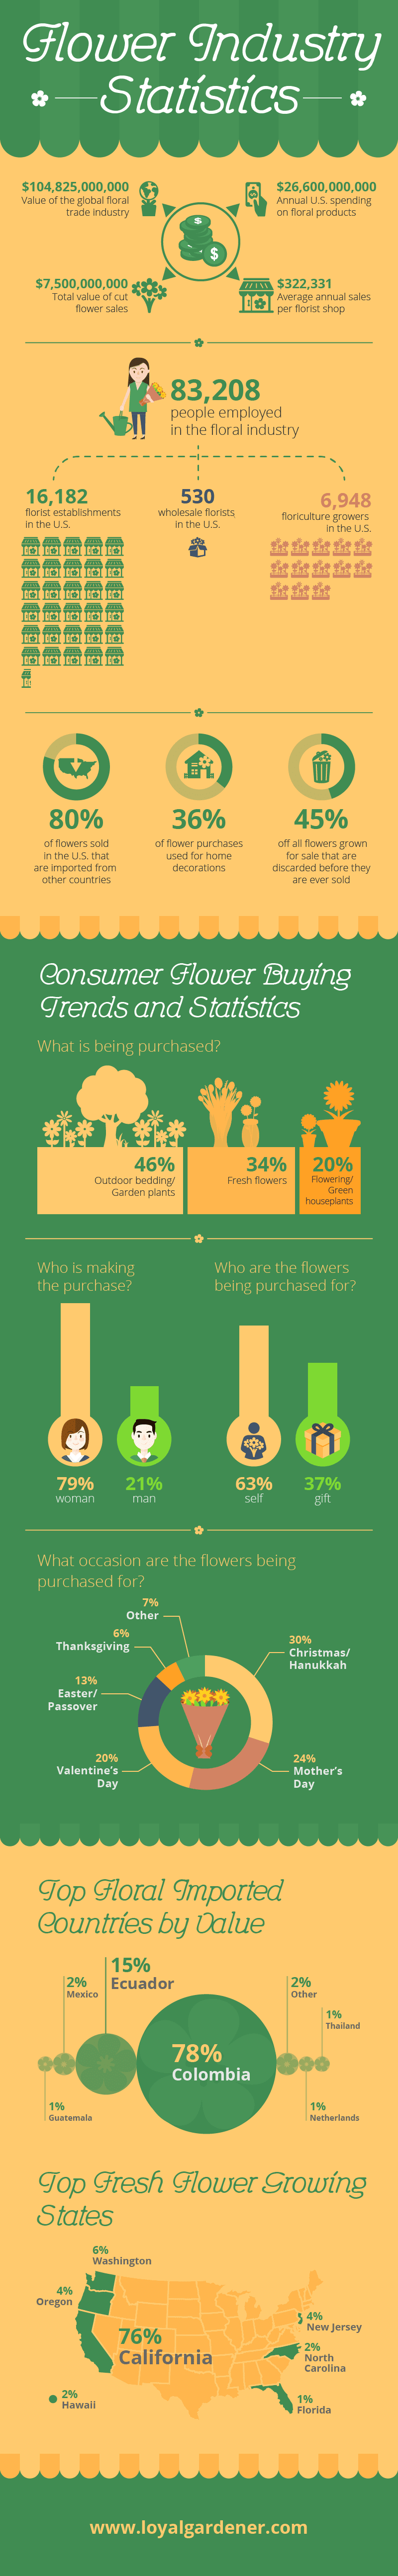 Flower Industry Statistics Infographic